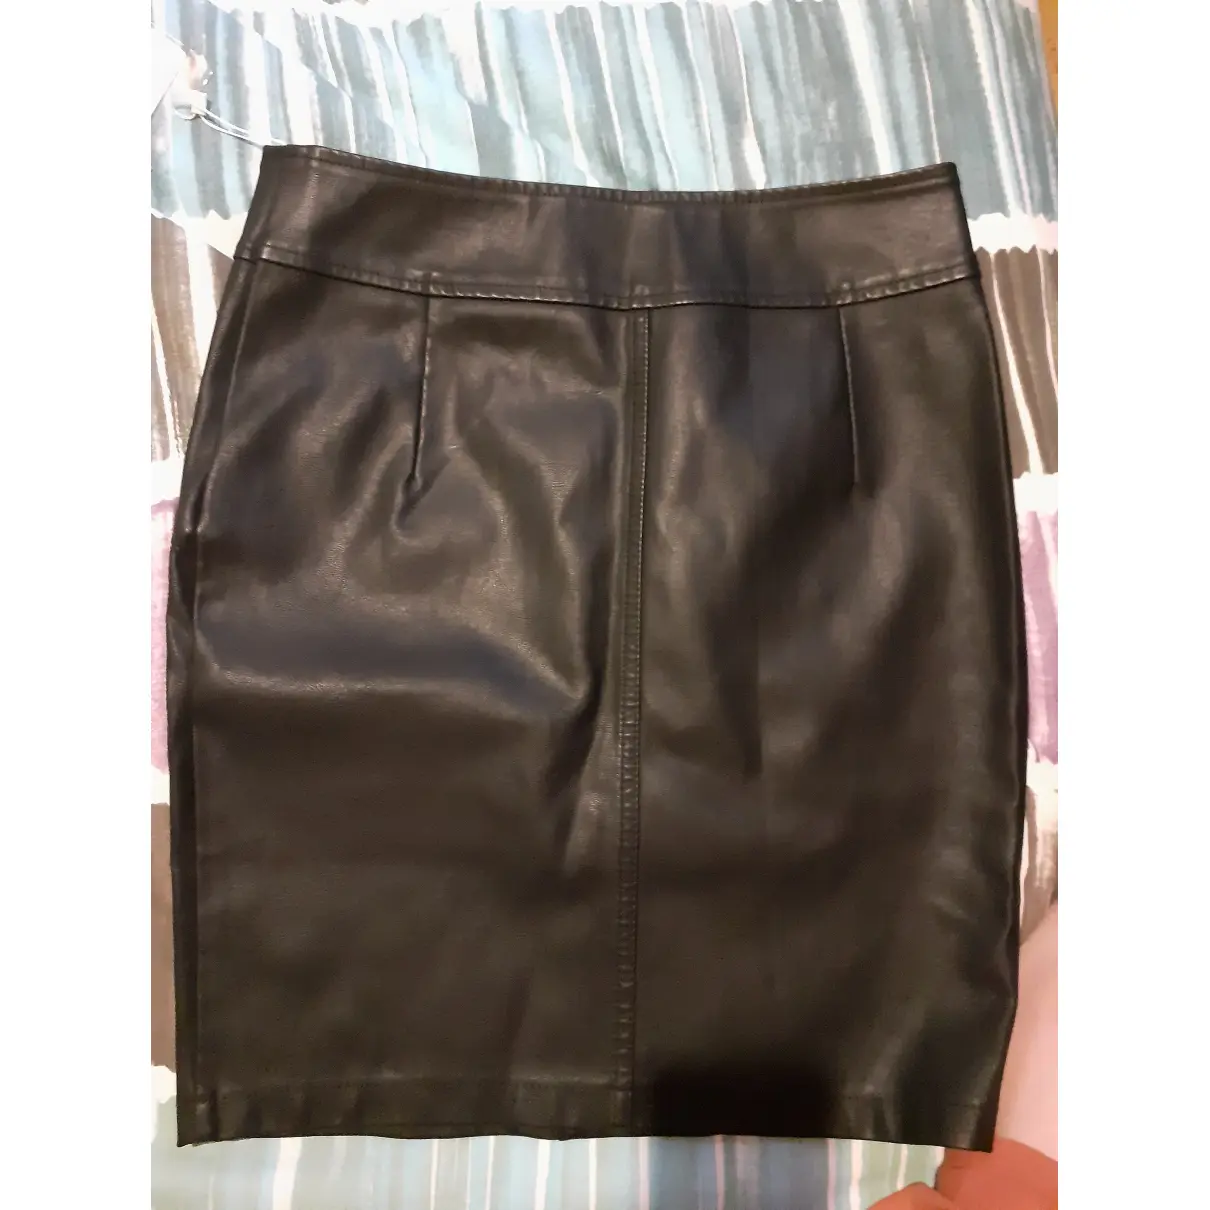 Buy Joomi Lim Patent leather mid-length skirt online